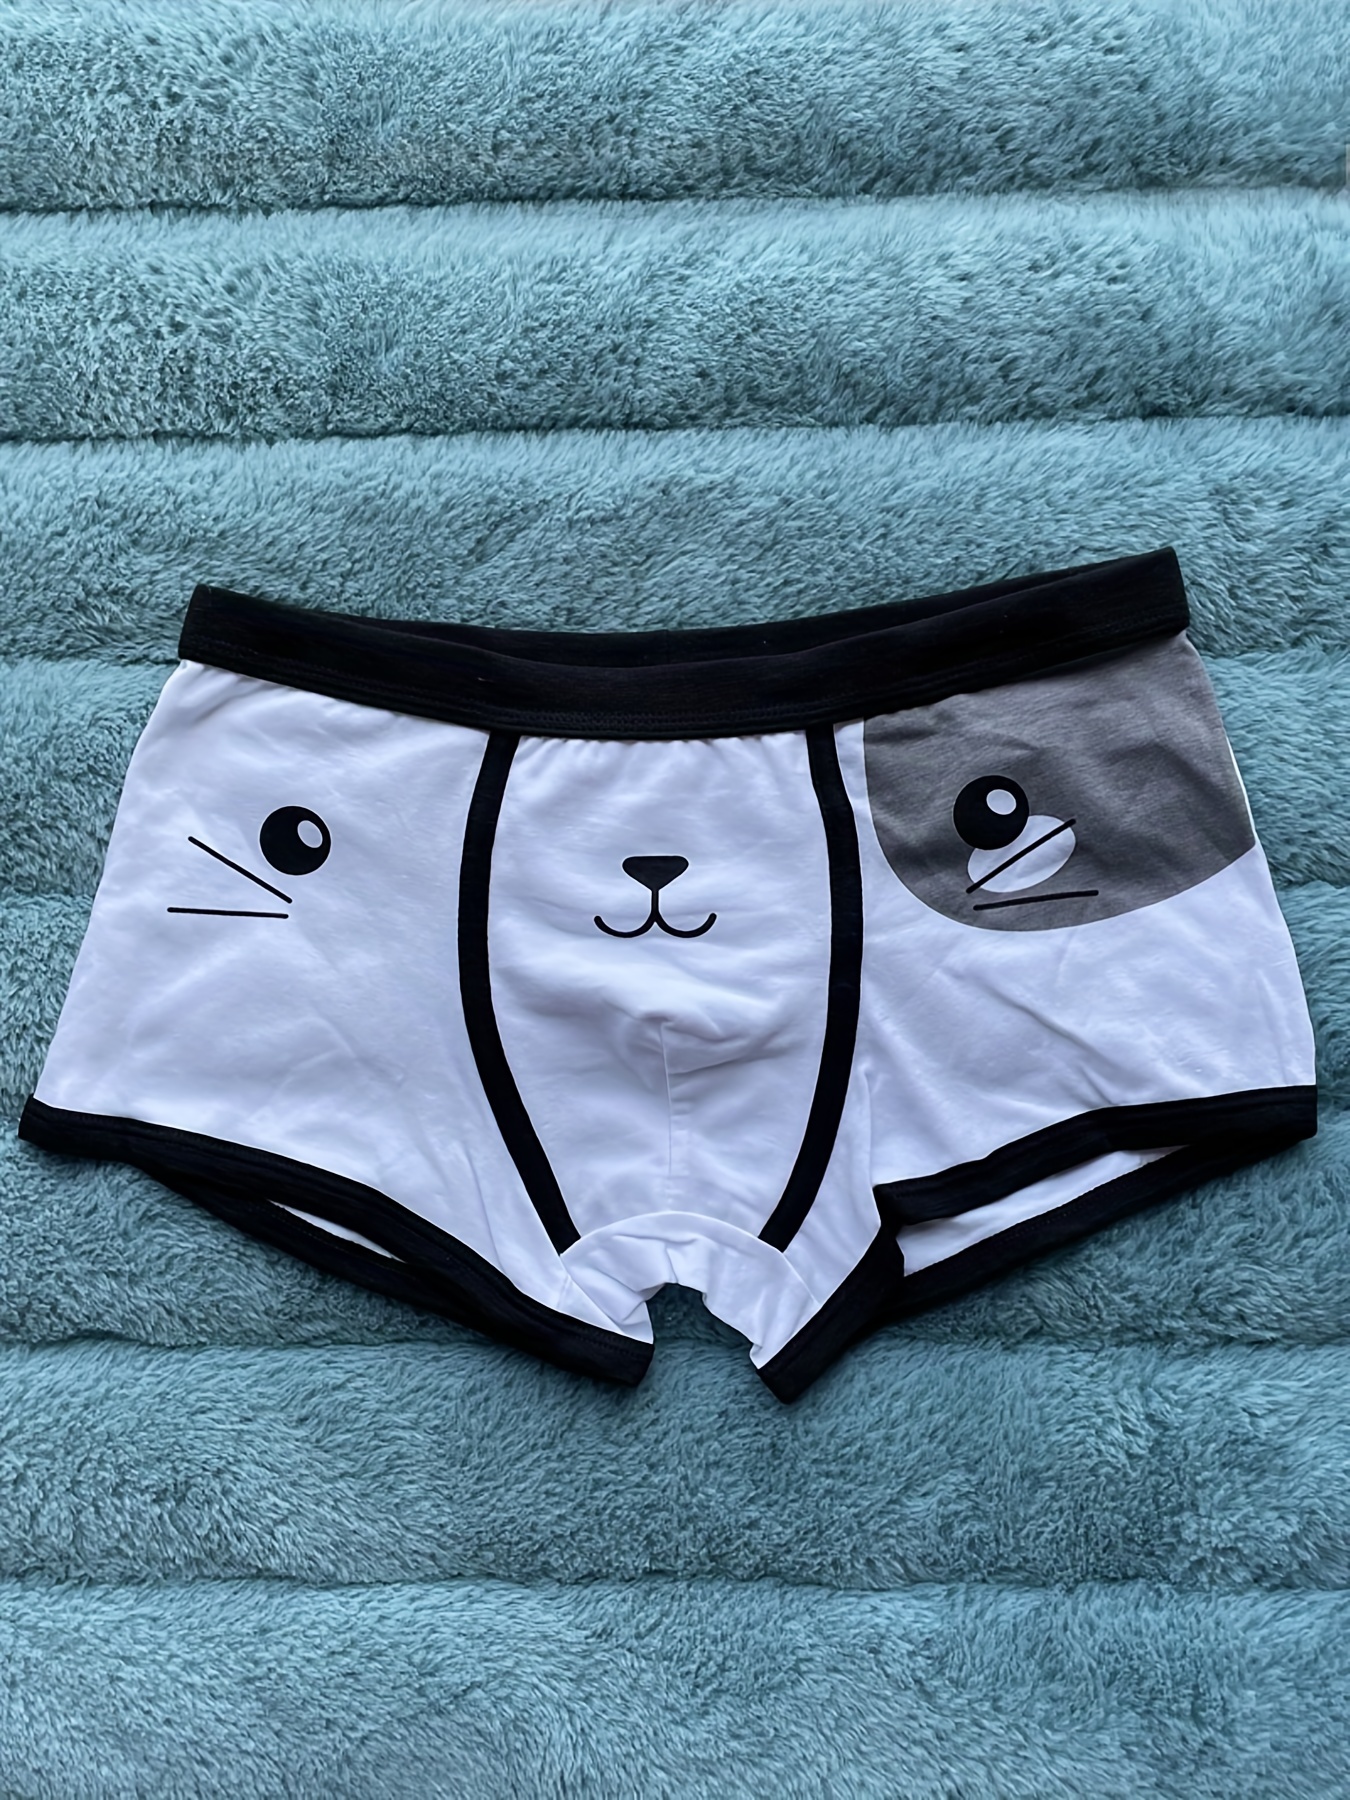 1pc Couple Style Briefs, Men's Cute Cartoon Cat Boxers Briefs, Cotton  Breathable Comfy Slightly Stretch Underwear, Women's Cartoon Cute Cat Briefs